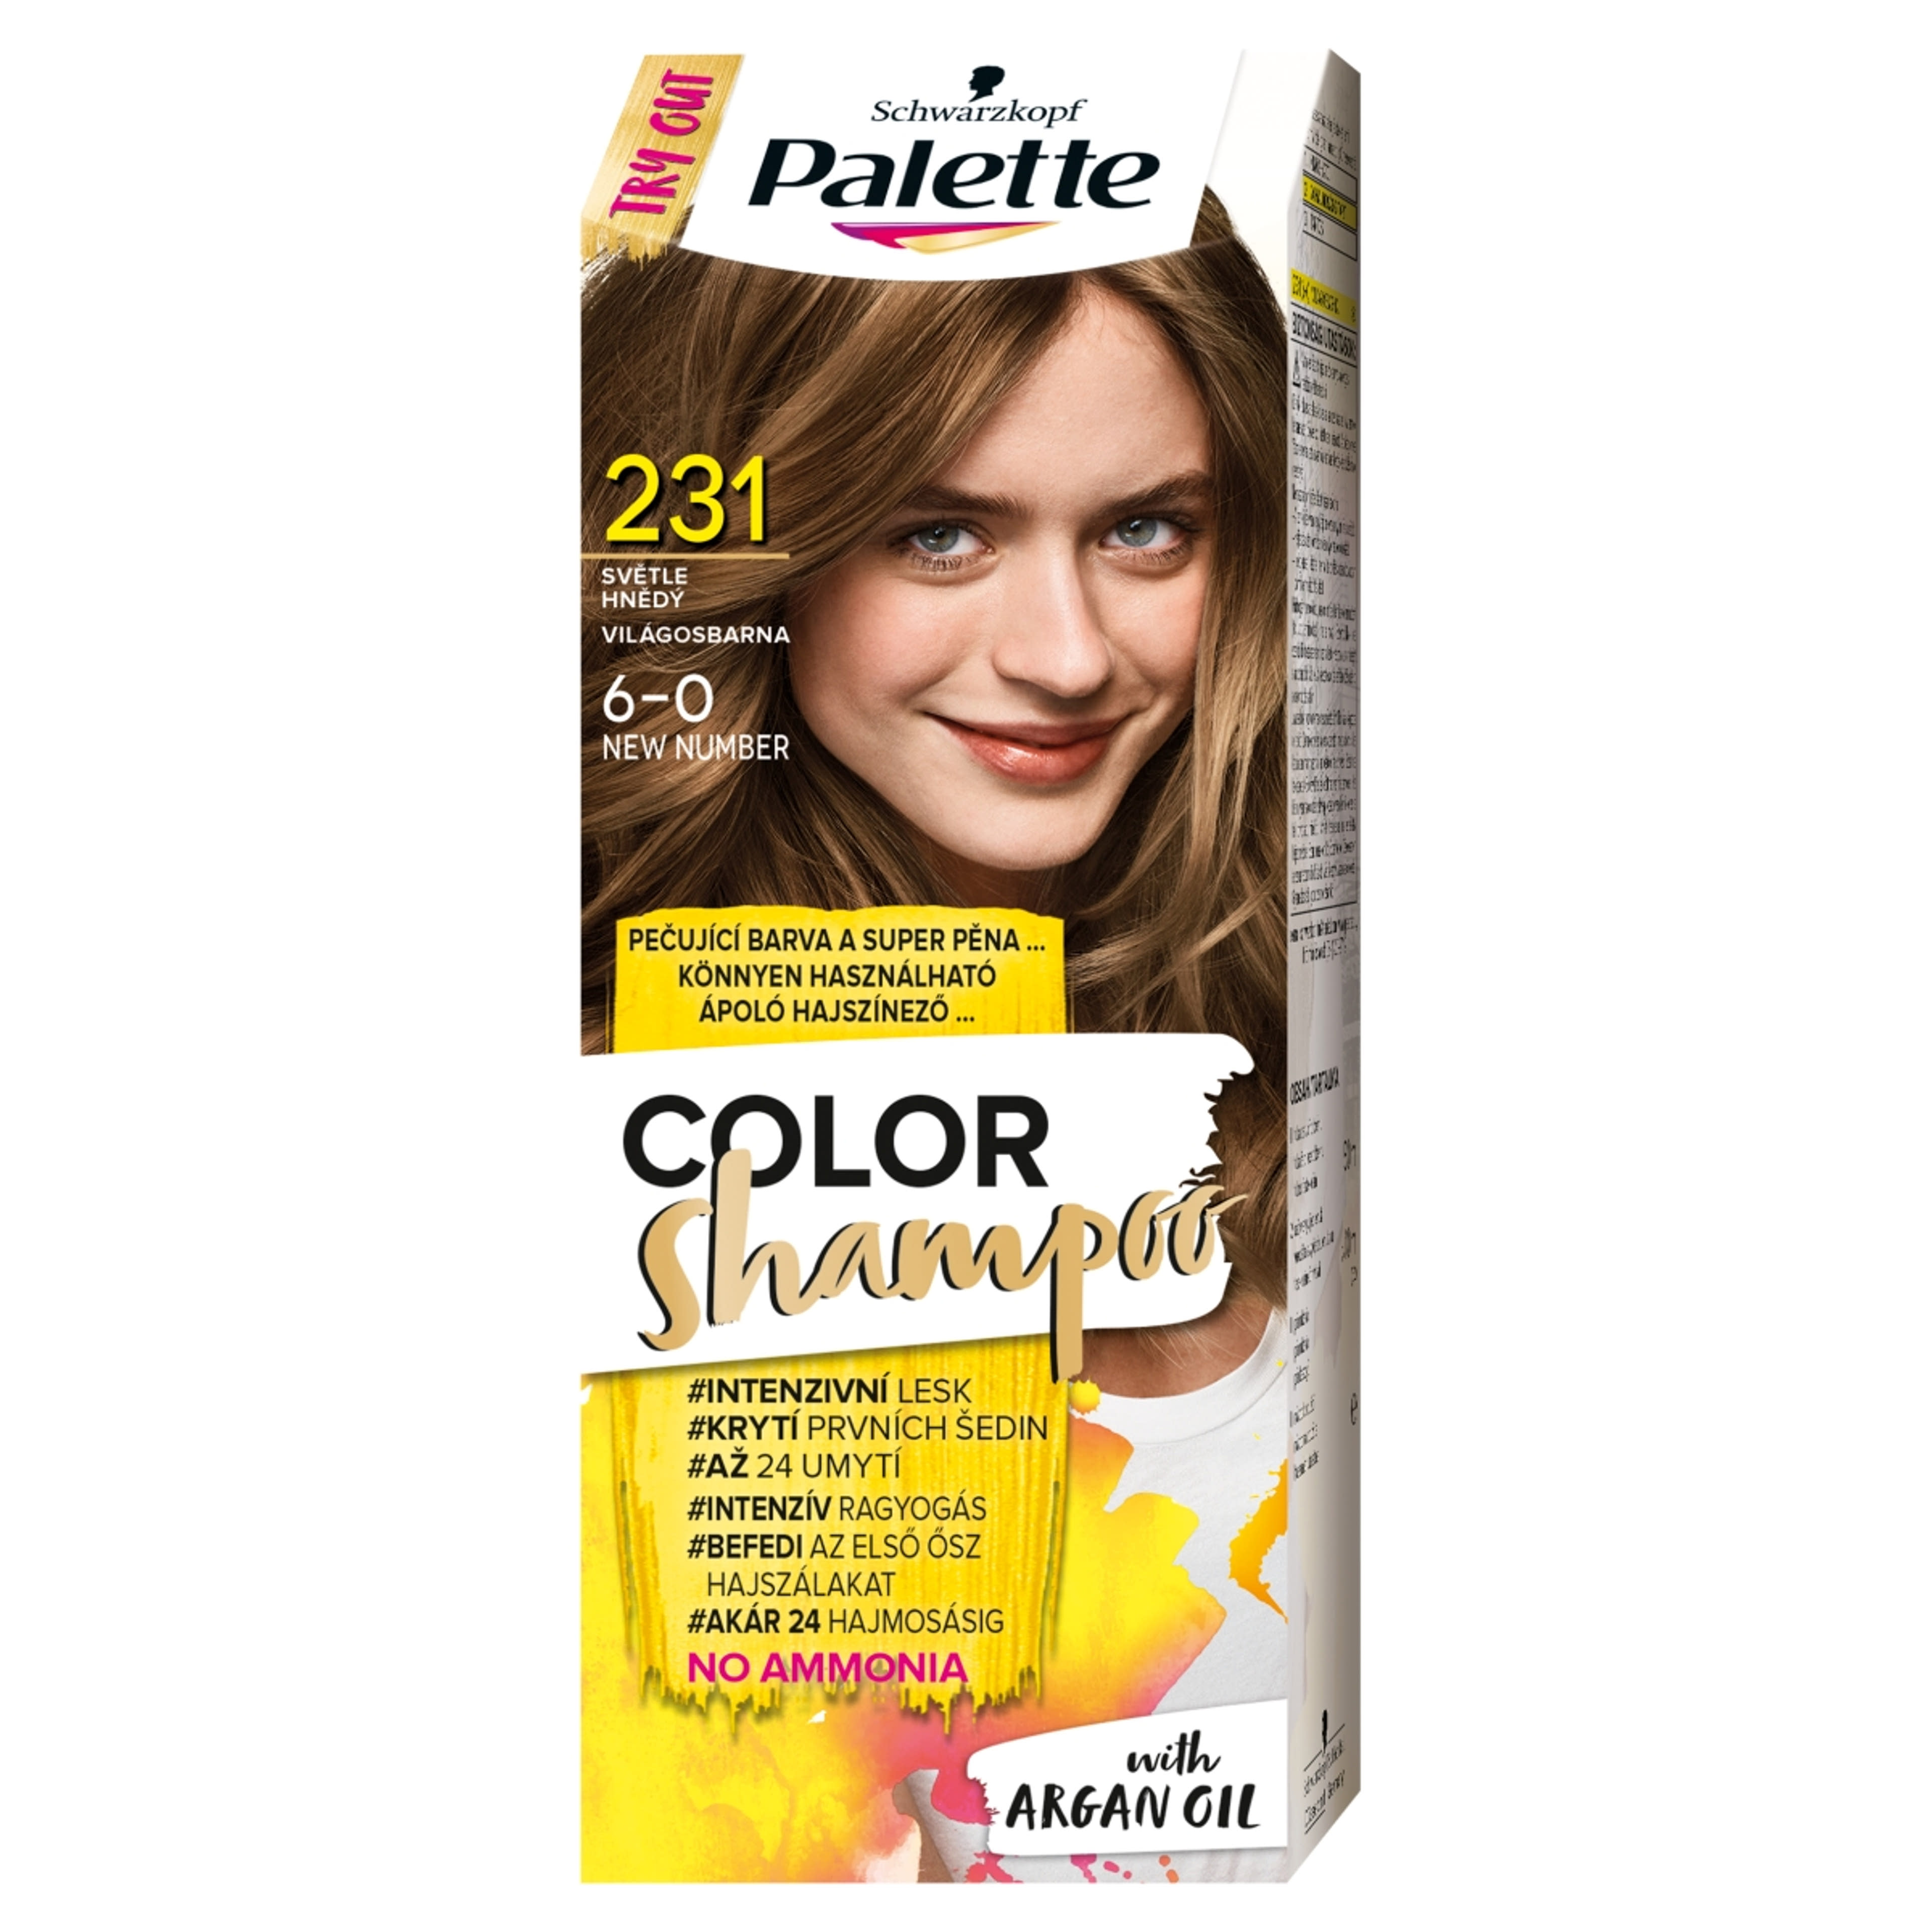 Schwarzkopf Palette Color Shampoo hajfesték 231 világosbarna - 1 db-1